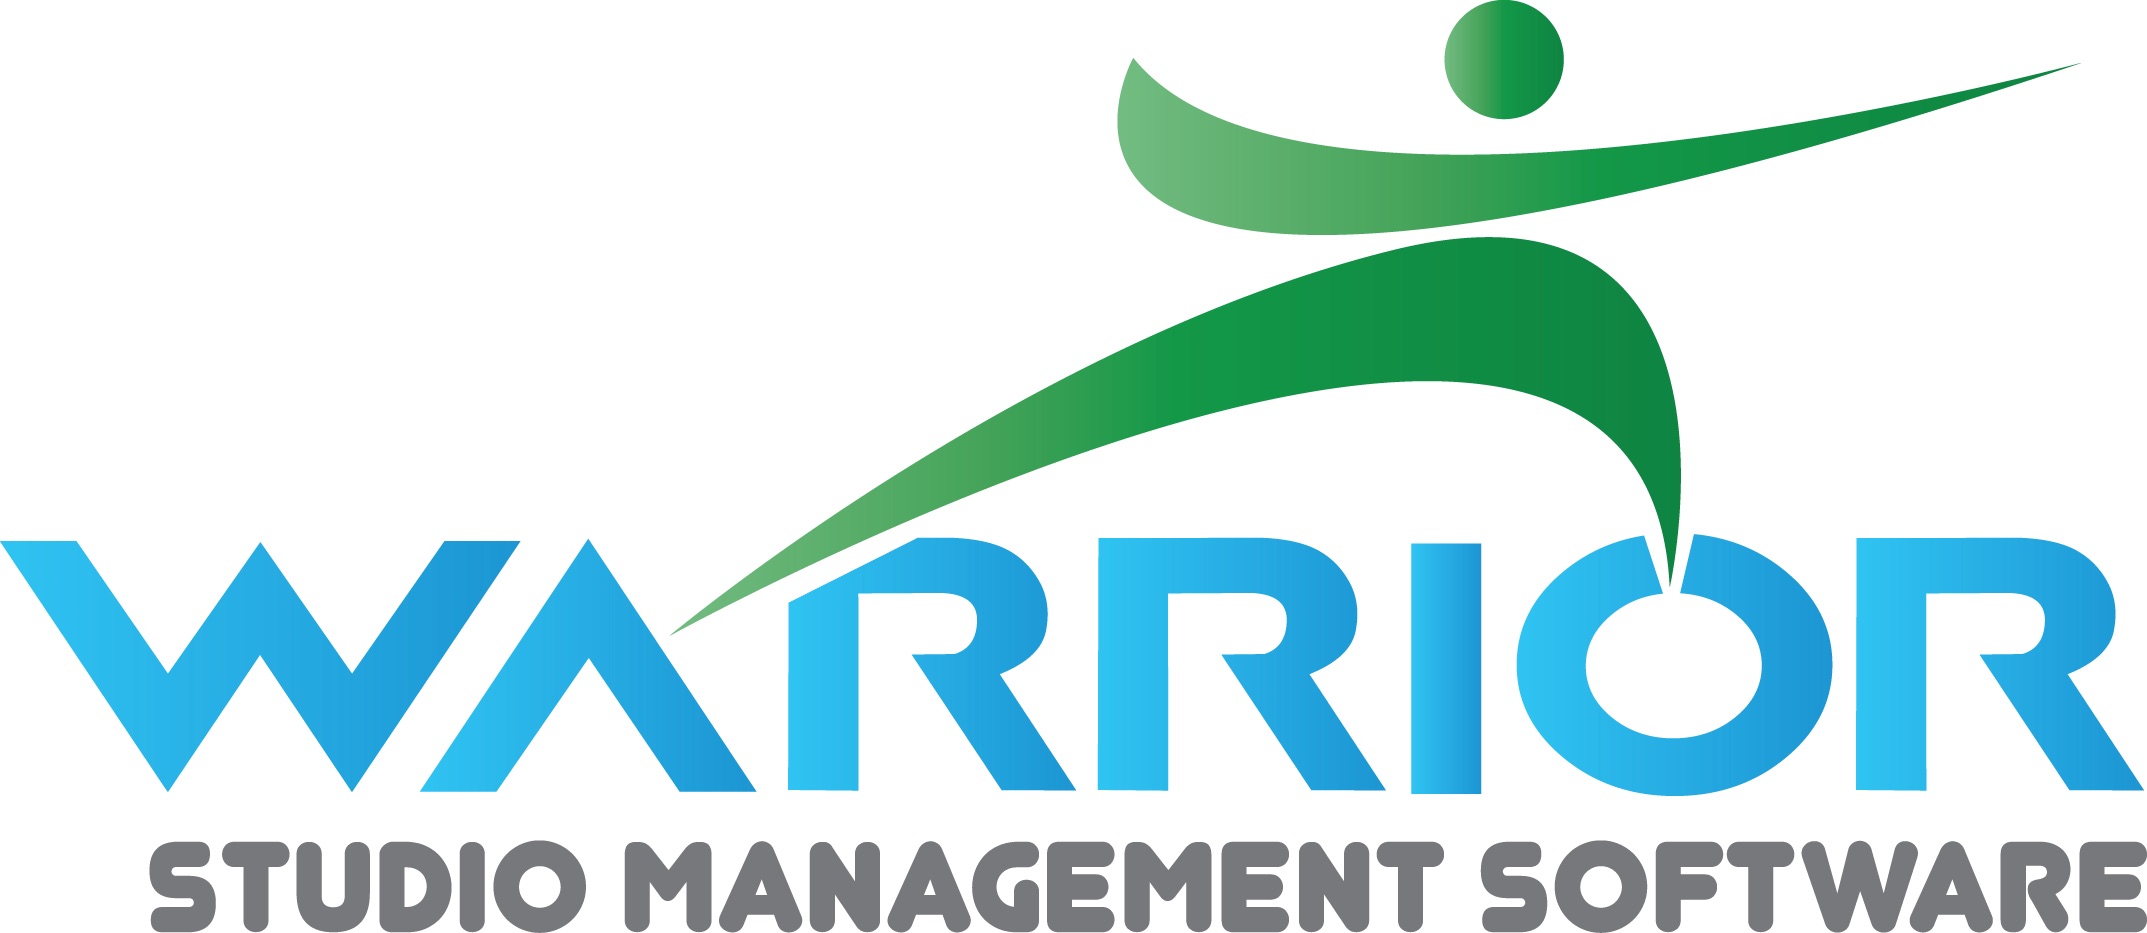 Warrior Studio Management Software